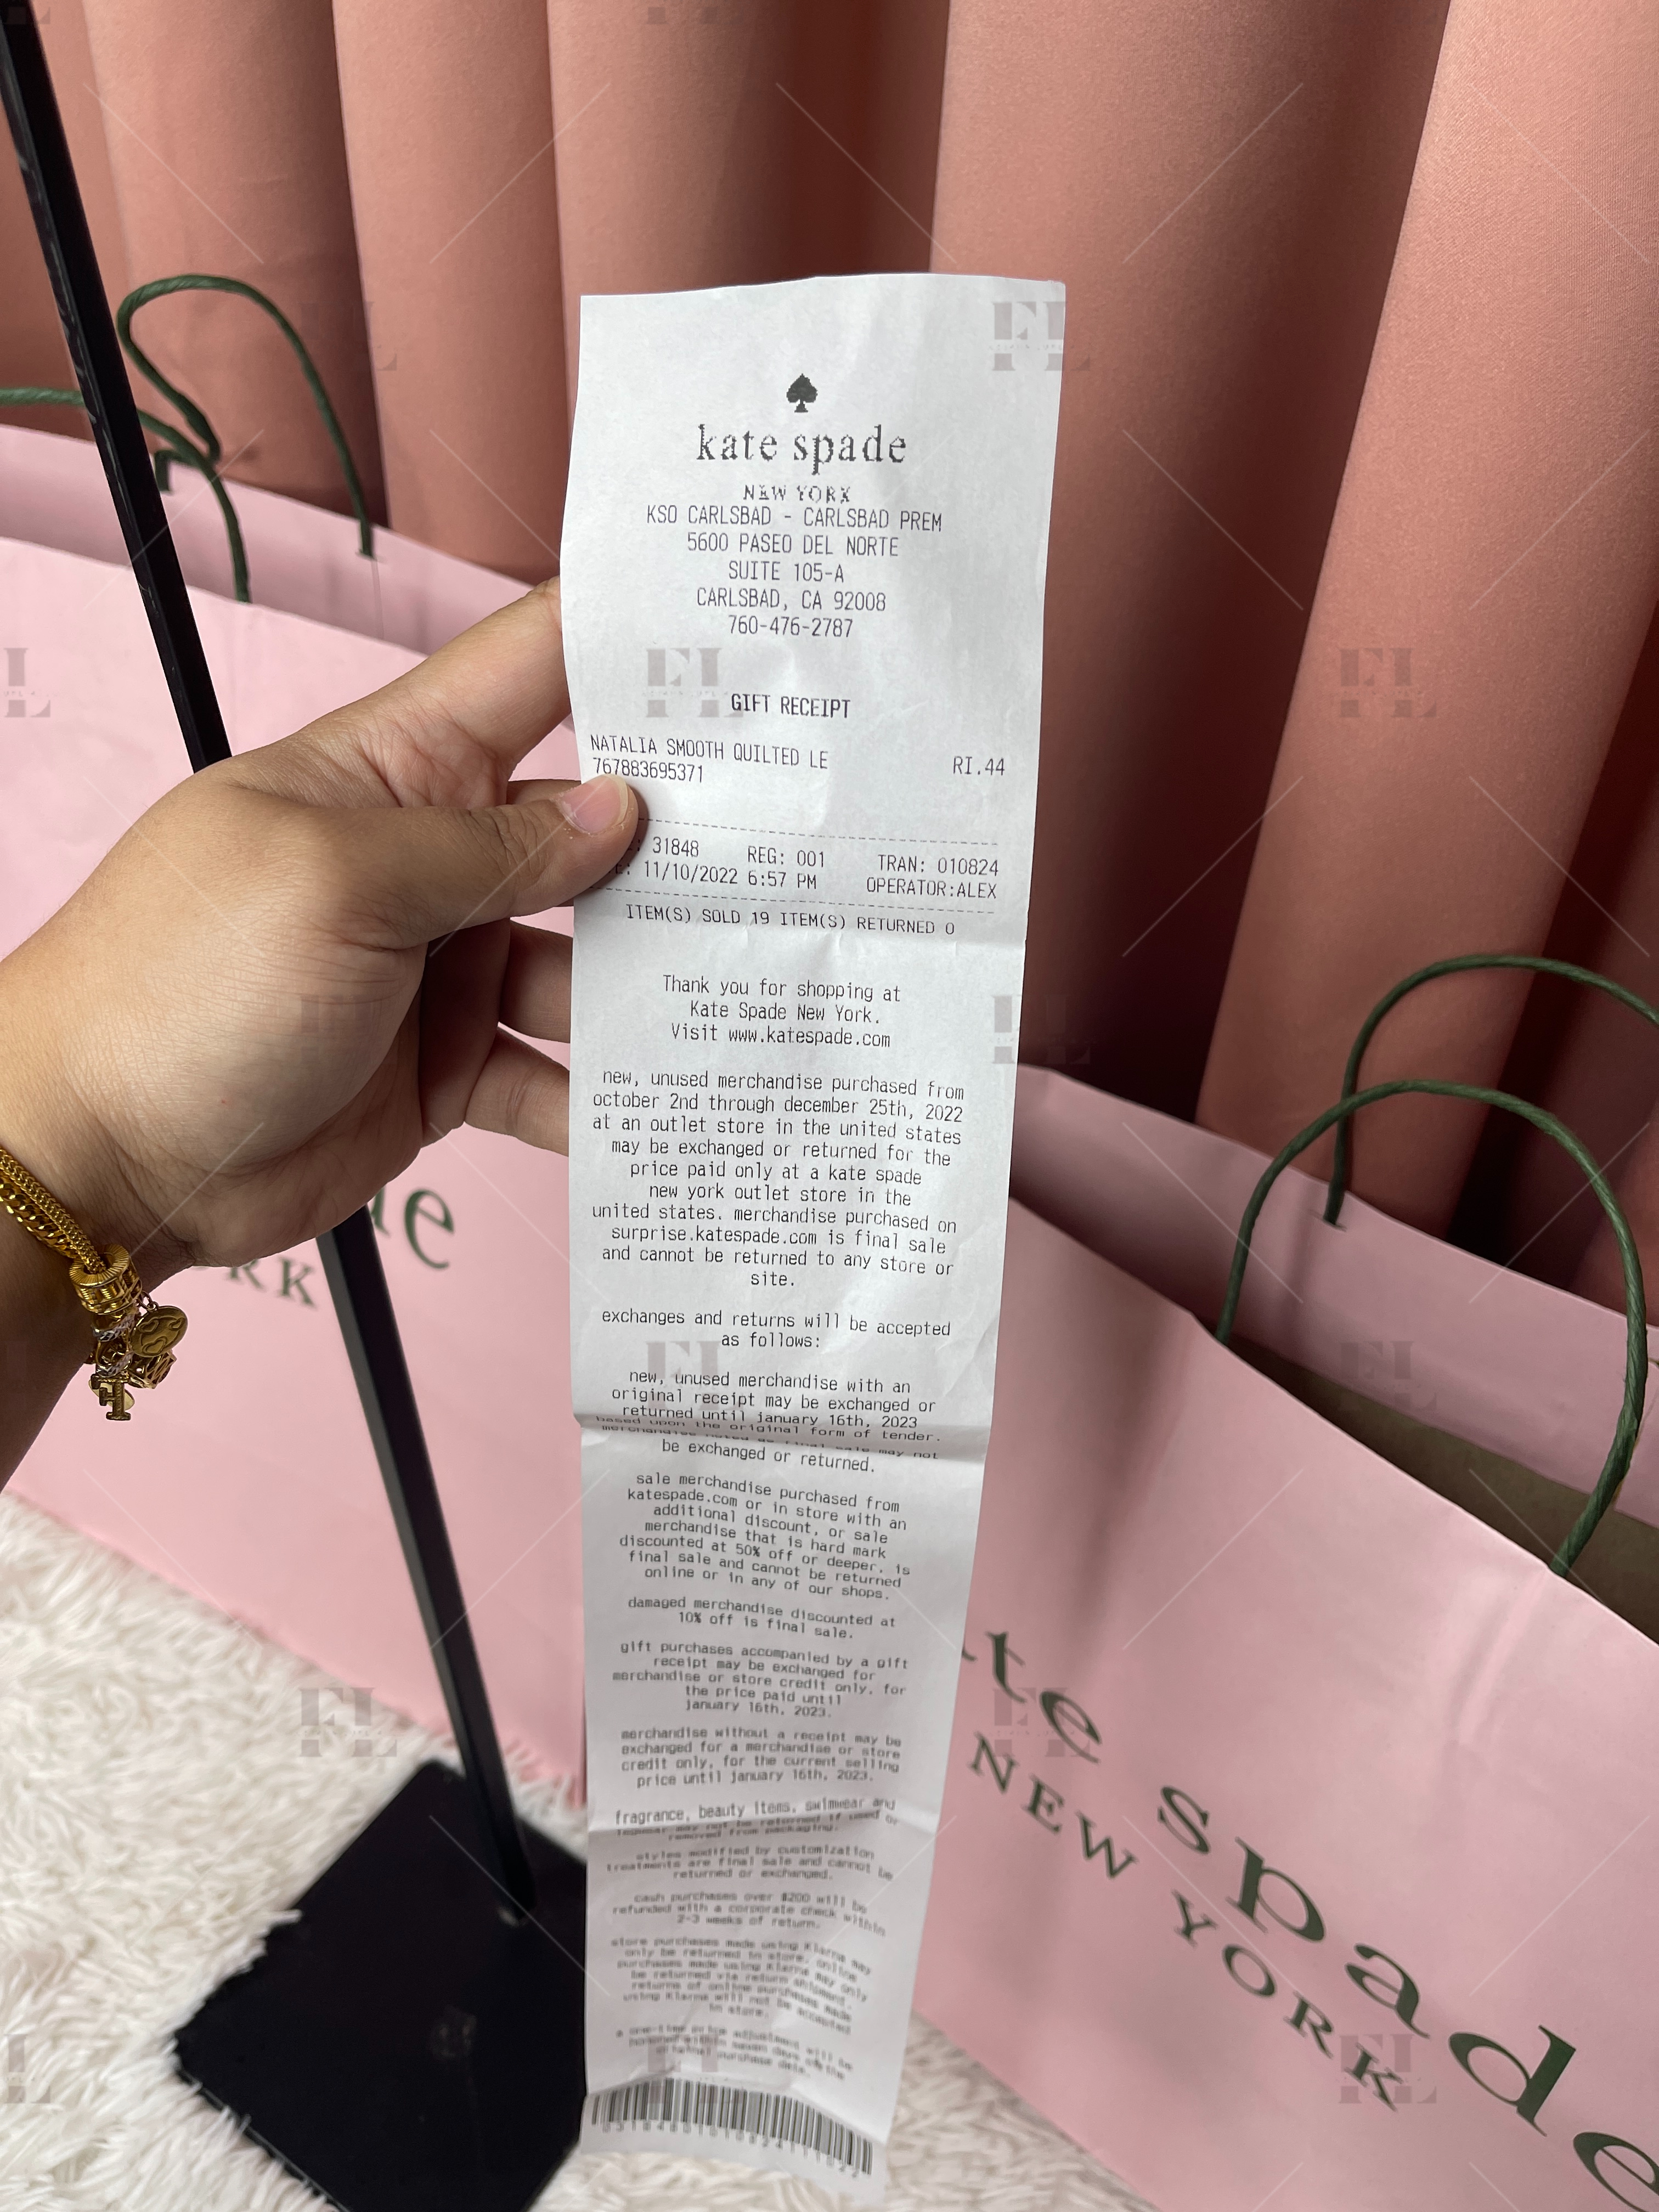 "Sis, kalau beli dengan sis dapat gift receipt kan? Senang i nak check authenticity"